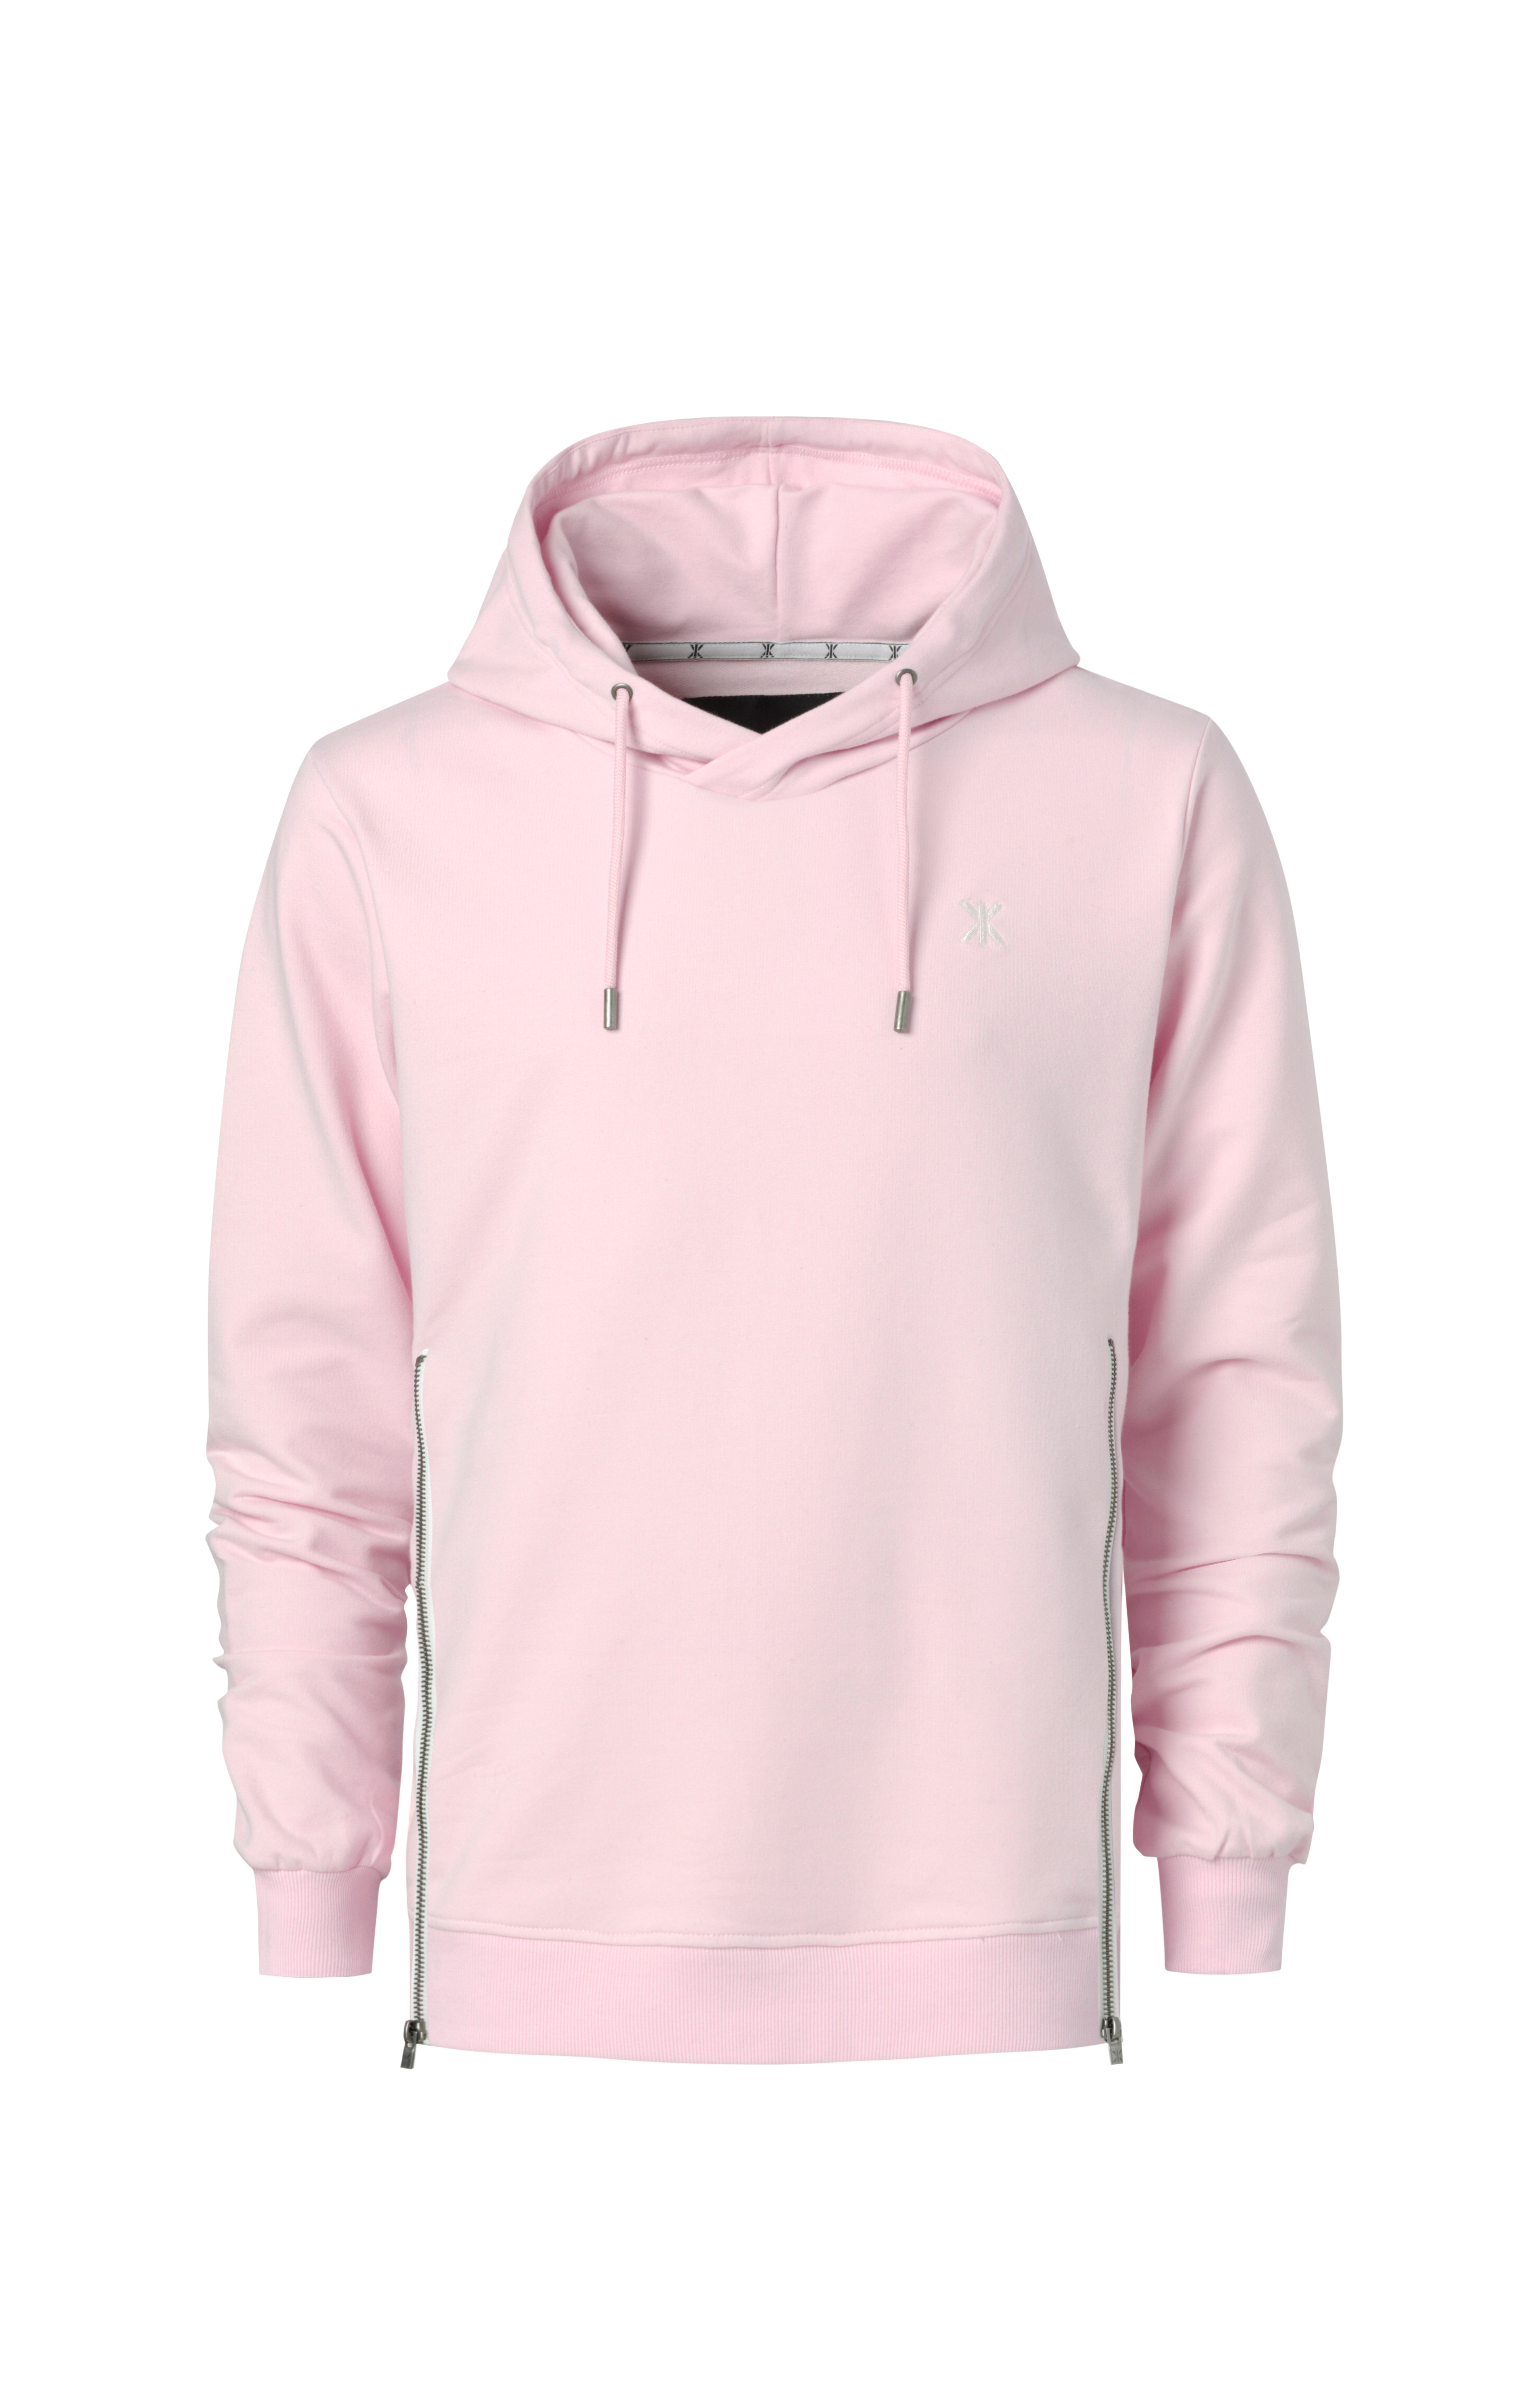 pink ice cream hoodie